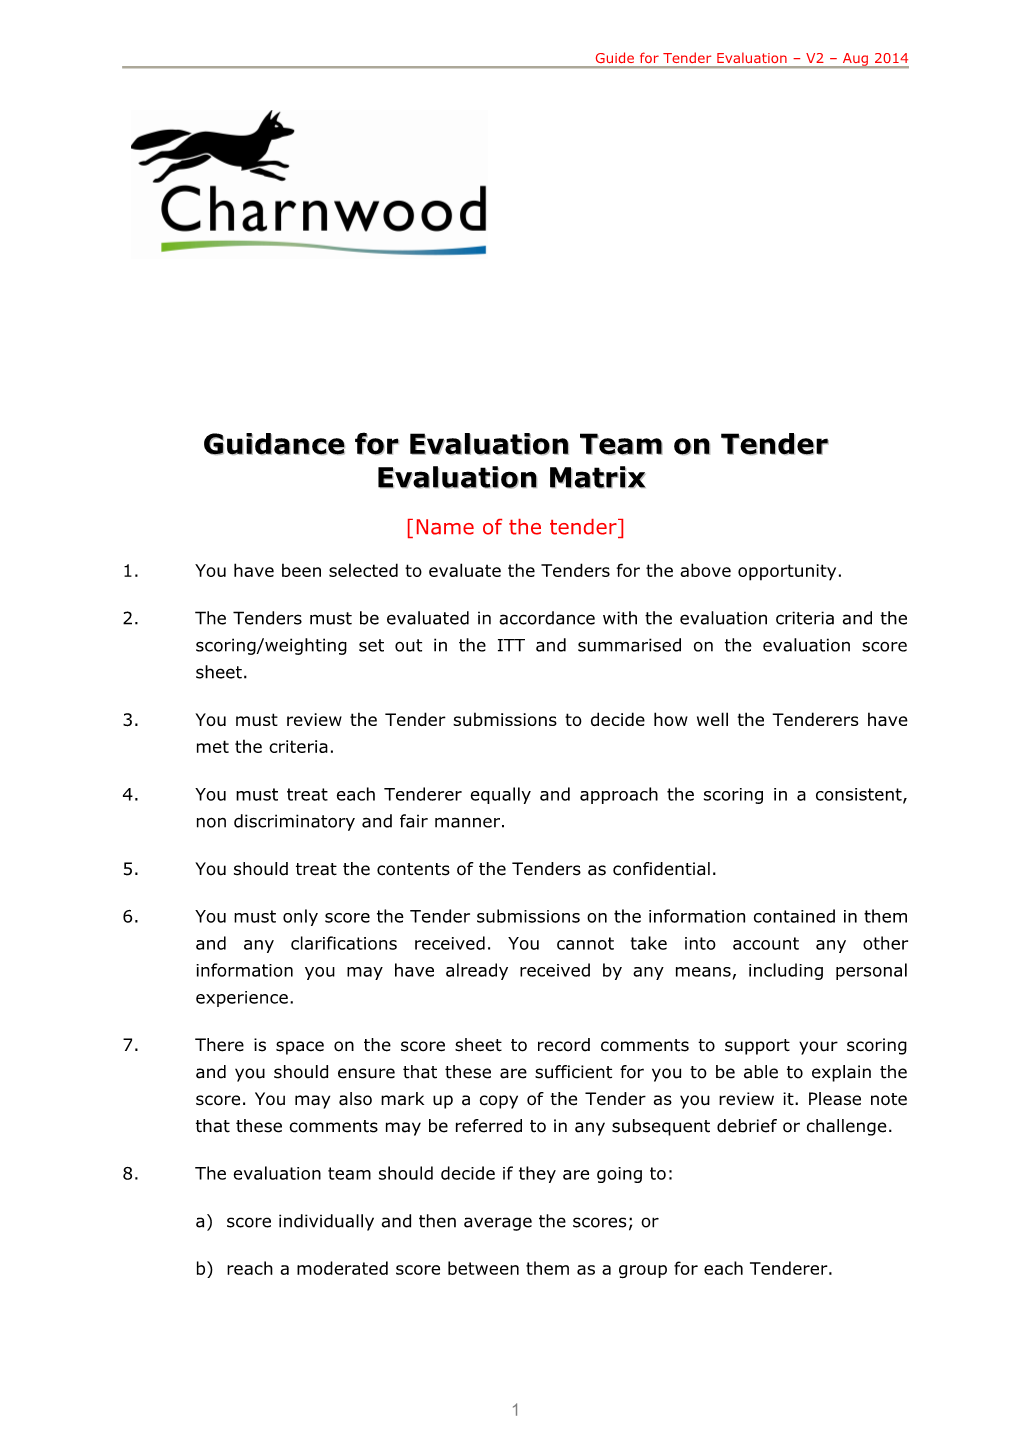 Guidance for Evaluation Team on Tender Evaluation Matrix